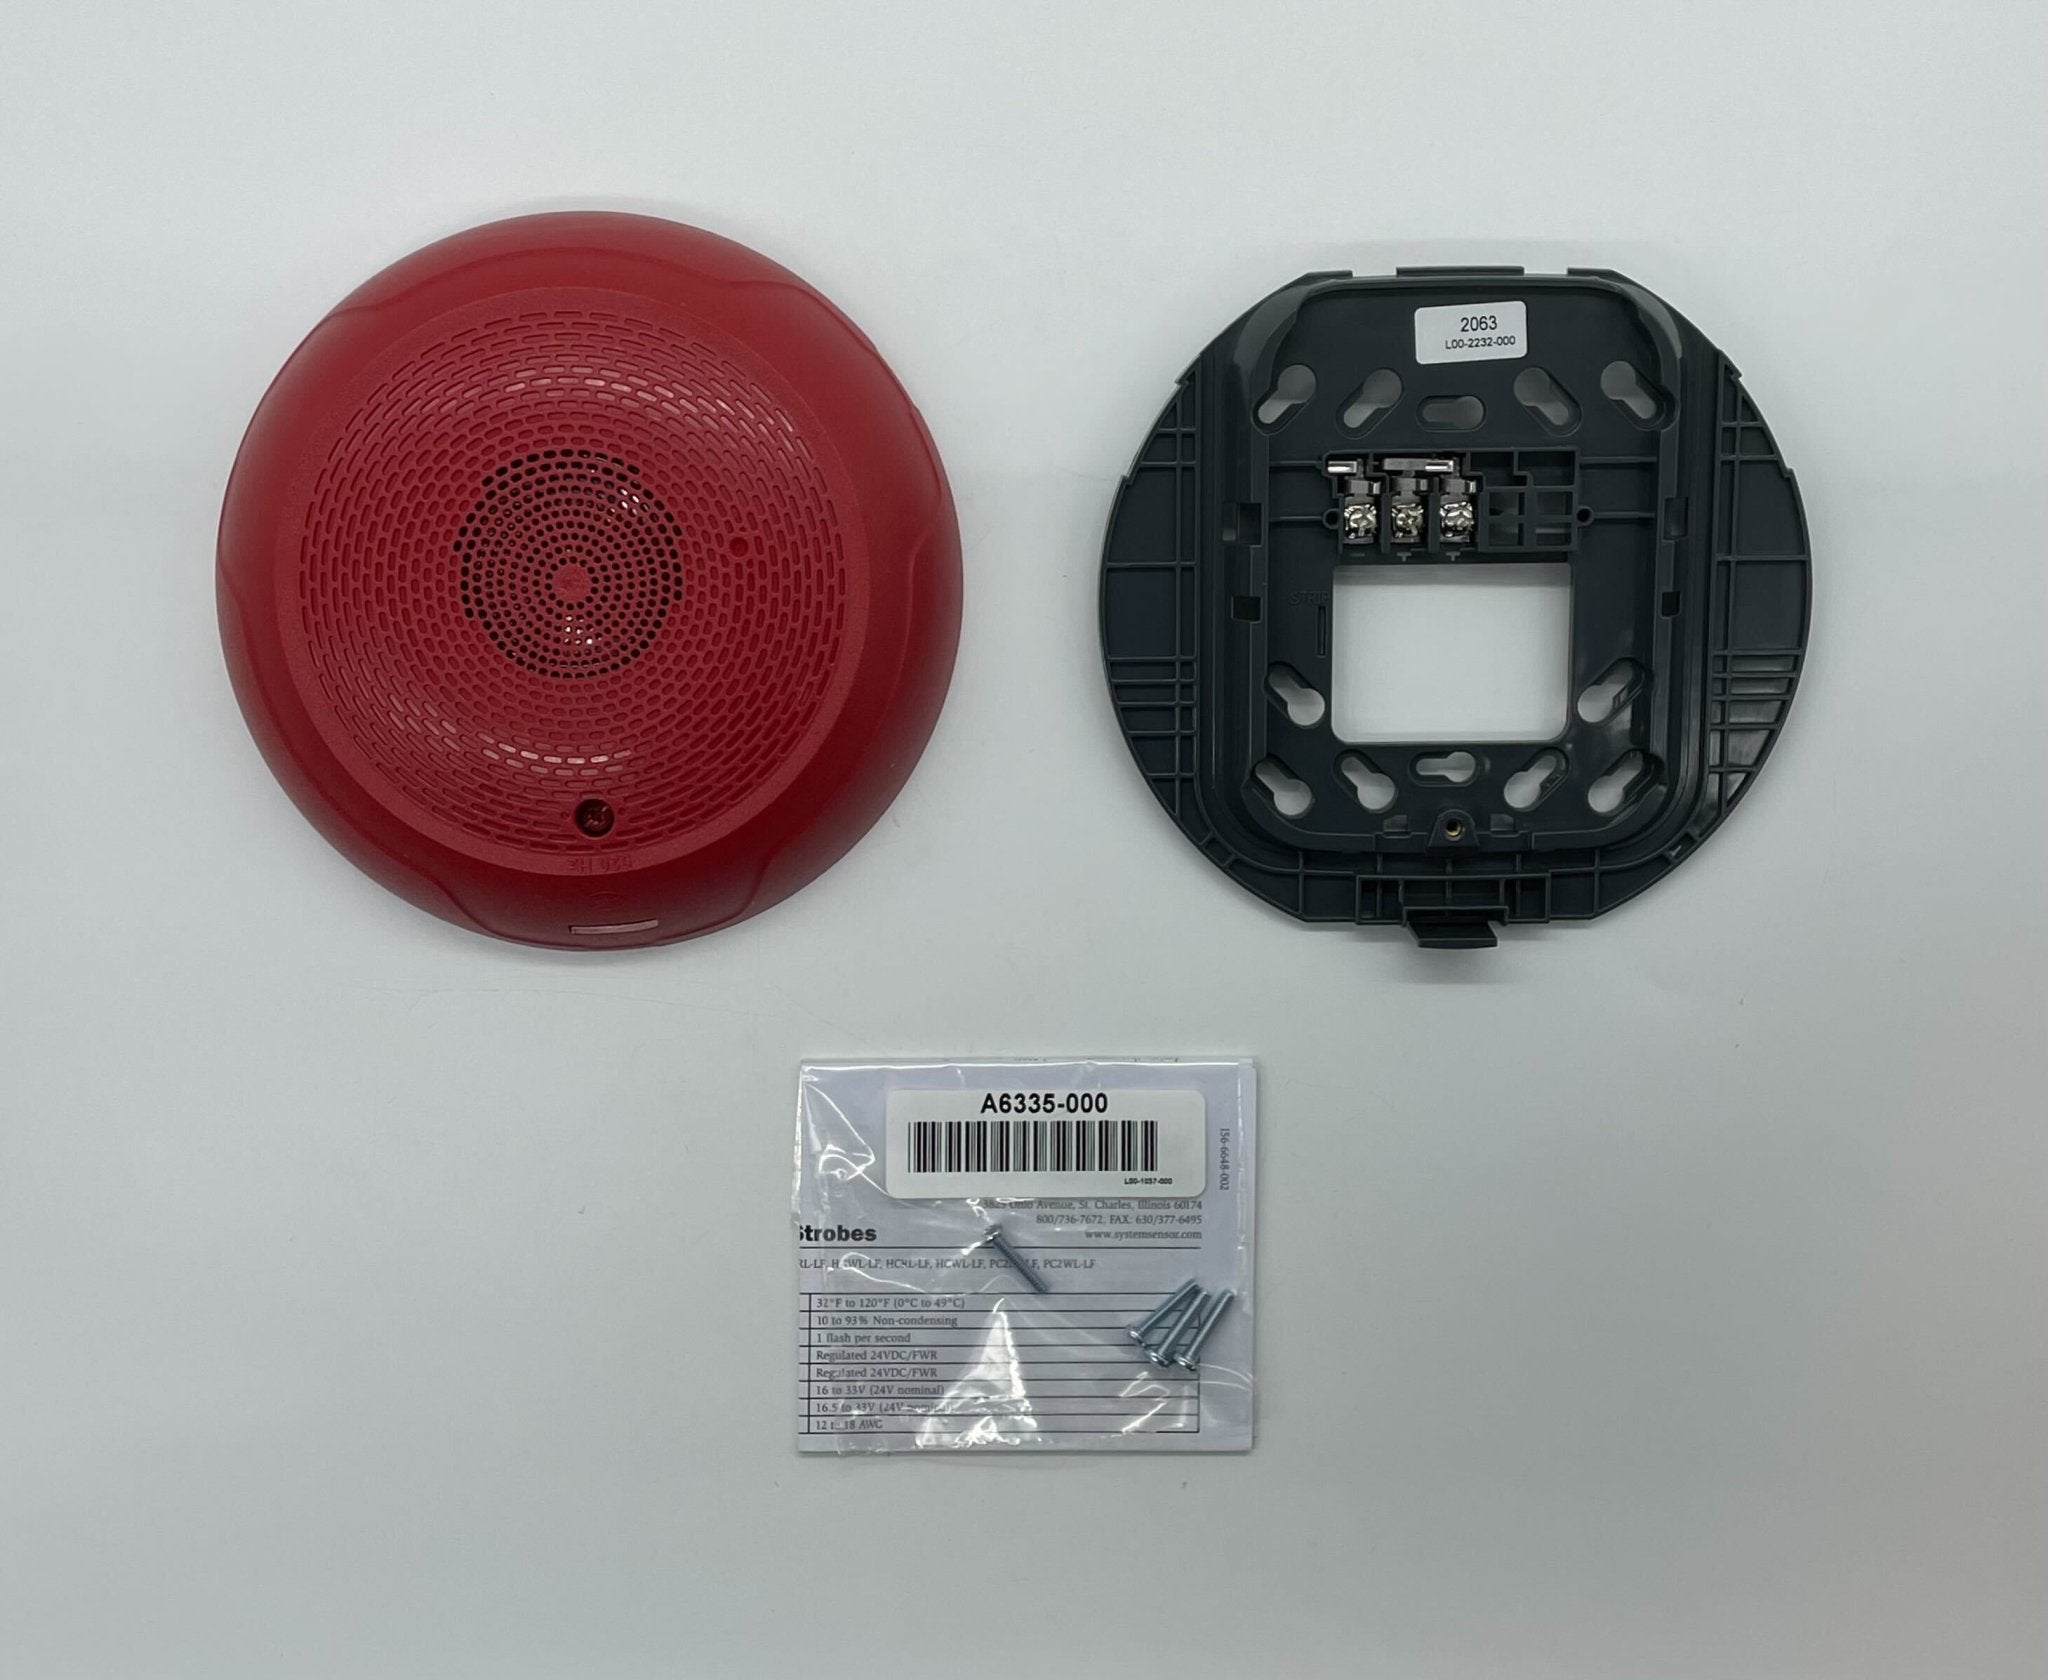 System Sensor HCRL-LF - The Fire Alarm Supplier